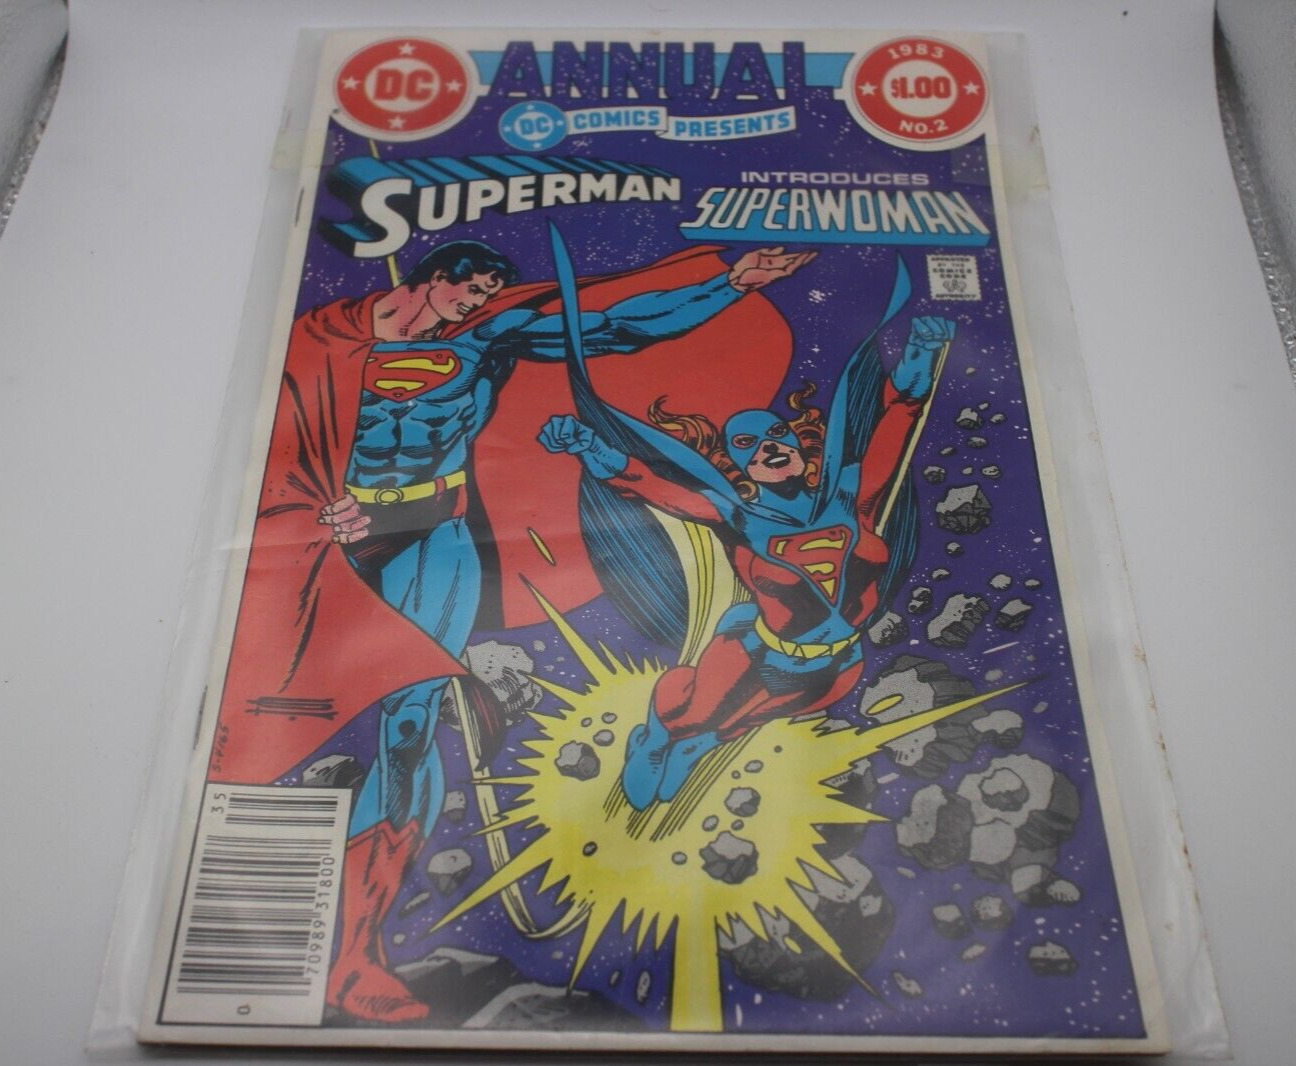 1983 DC Comics Presents Annual #2 Superman introduces Superwoman 1st appearance